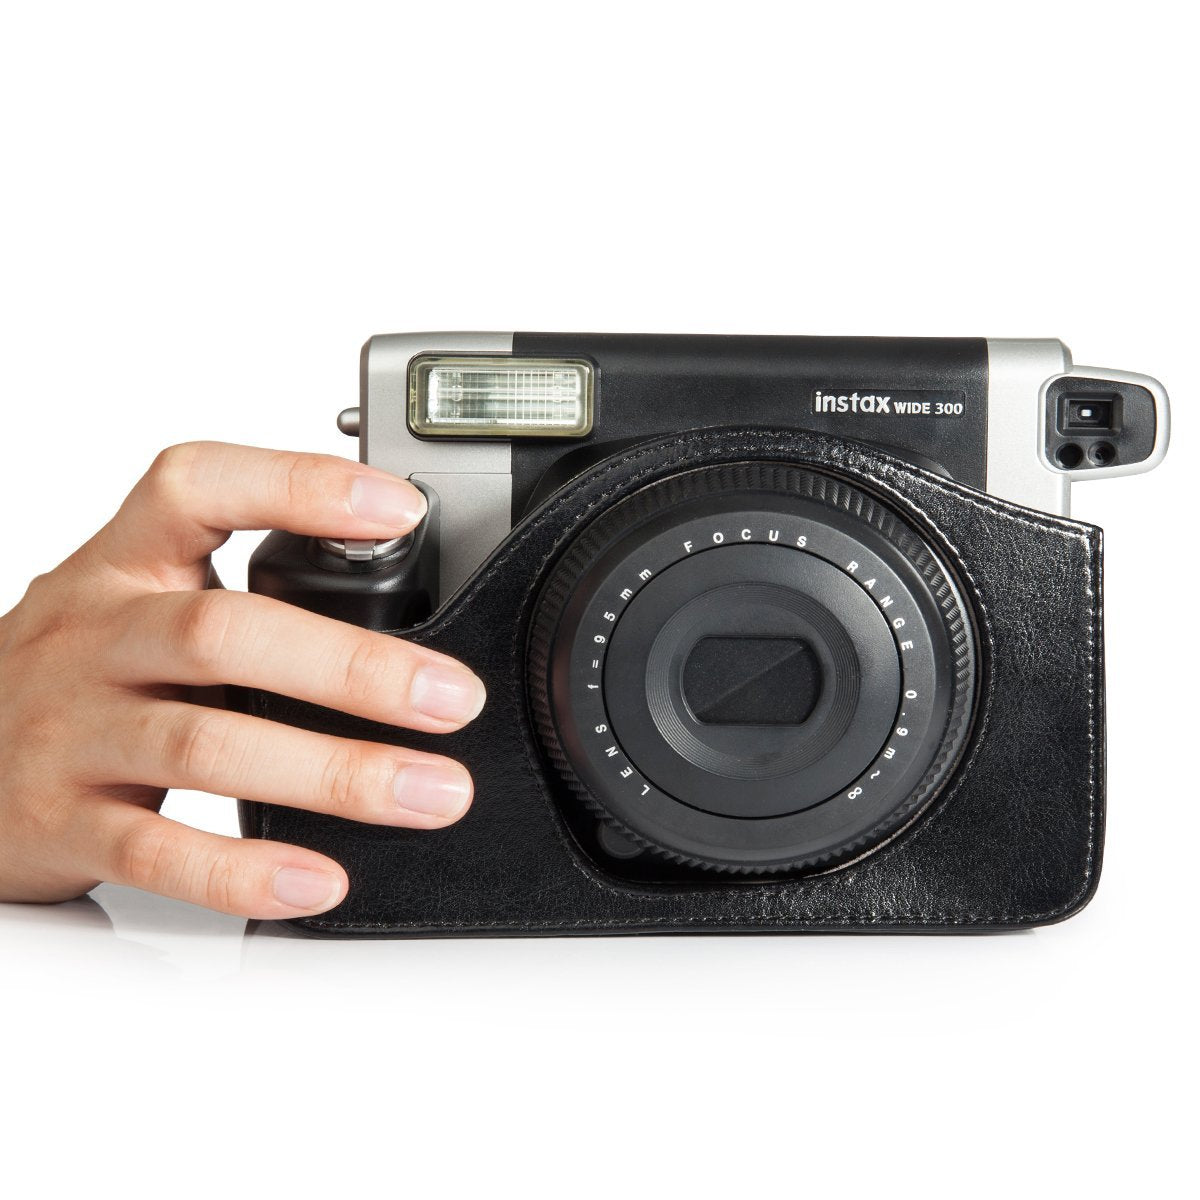 CAIUL Vintage Camera Case Bag For Fujifilm INSTAX Wide 300 Instant Camera,PU Leather Black